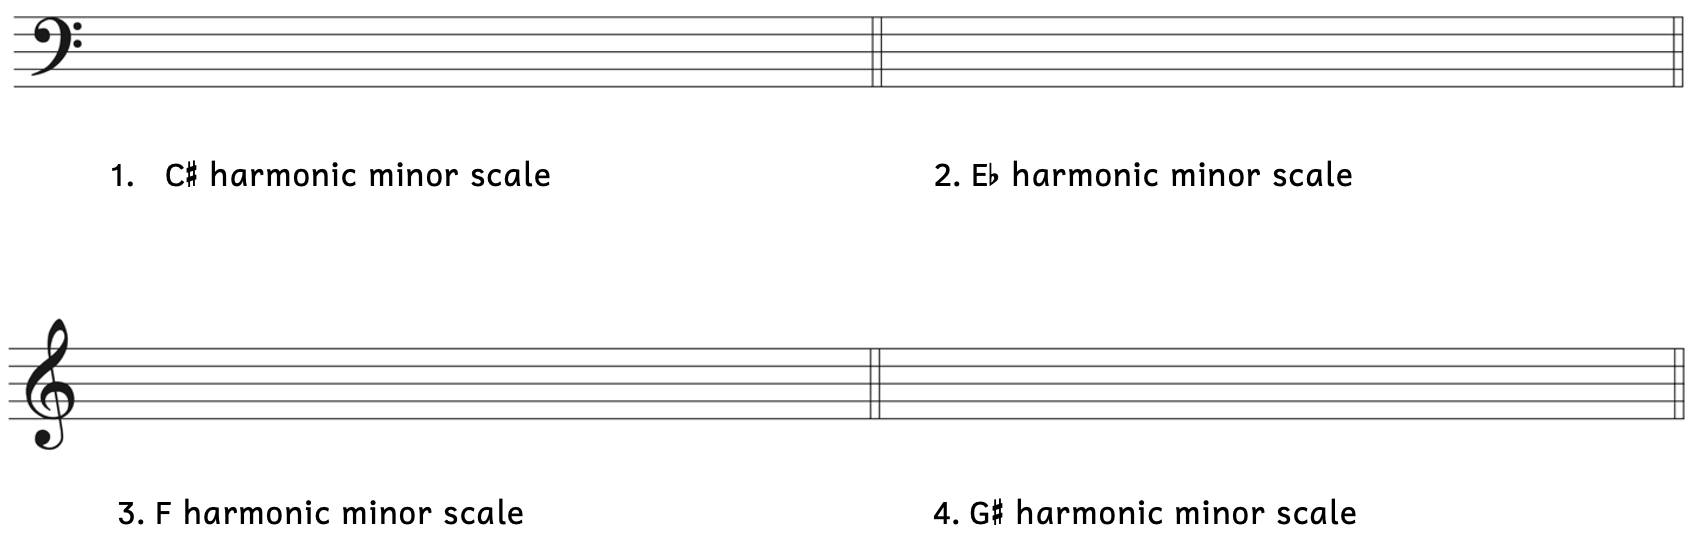 Number 1, C-sharp harmonic minor scale in bass clef. Number 2, E-flat harmonic minor scale in bass clef. Number 3, F harmonic minor scale in treble clef. Number 4, G-sharp harmonic minor scale in treble clef.